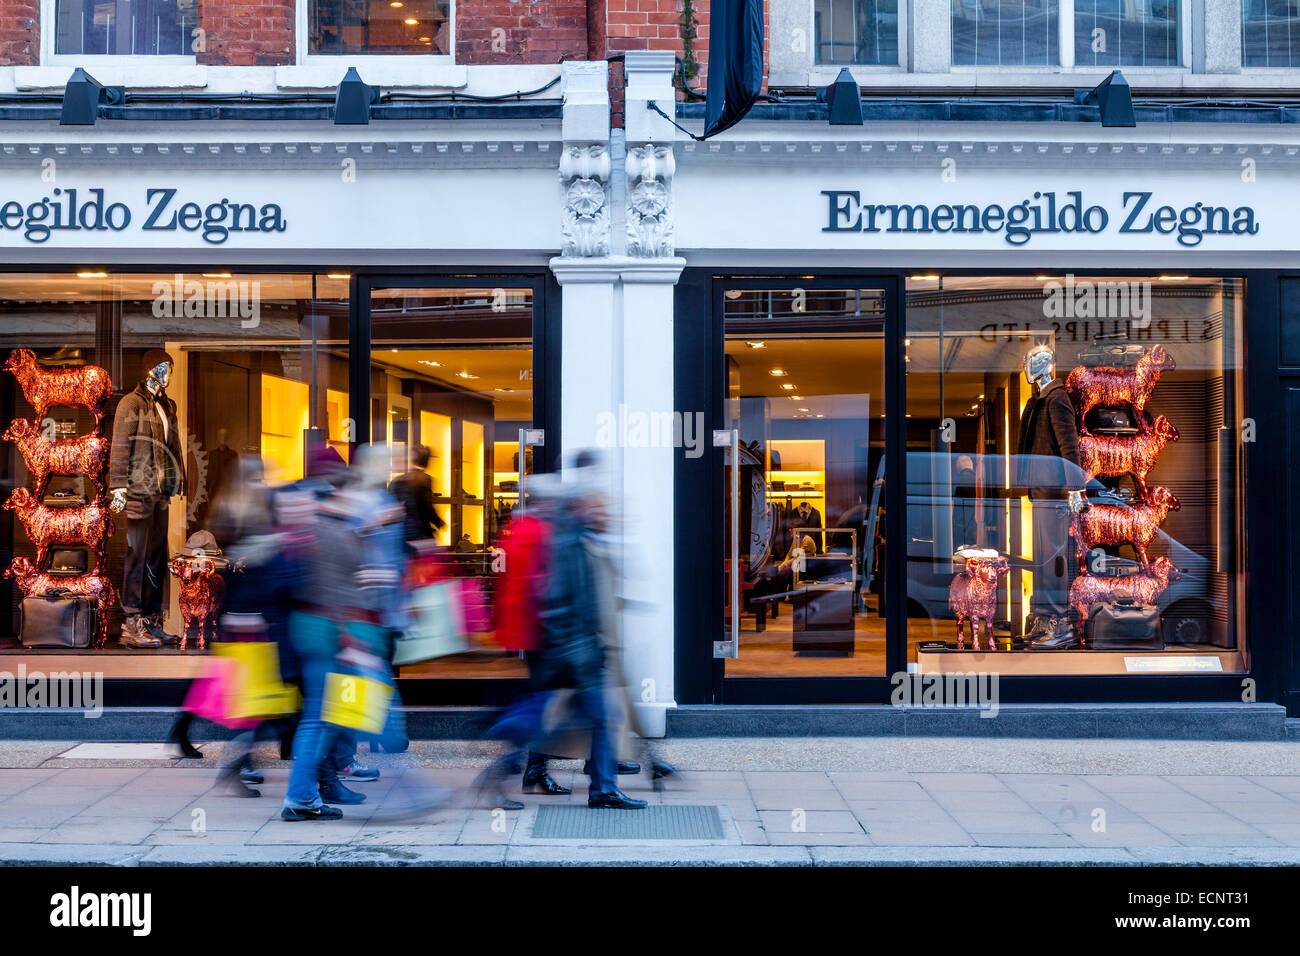 Ermenegildo Zegna Clothes Store In New Bond Street, London, England Stock Photo